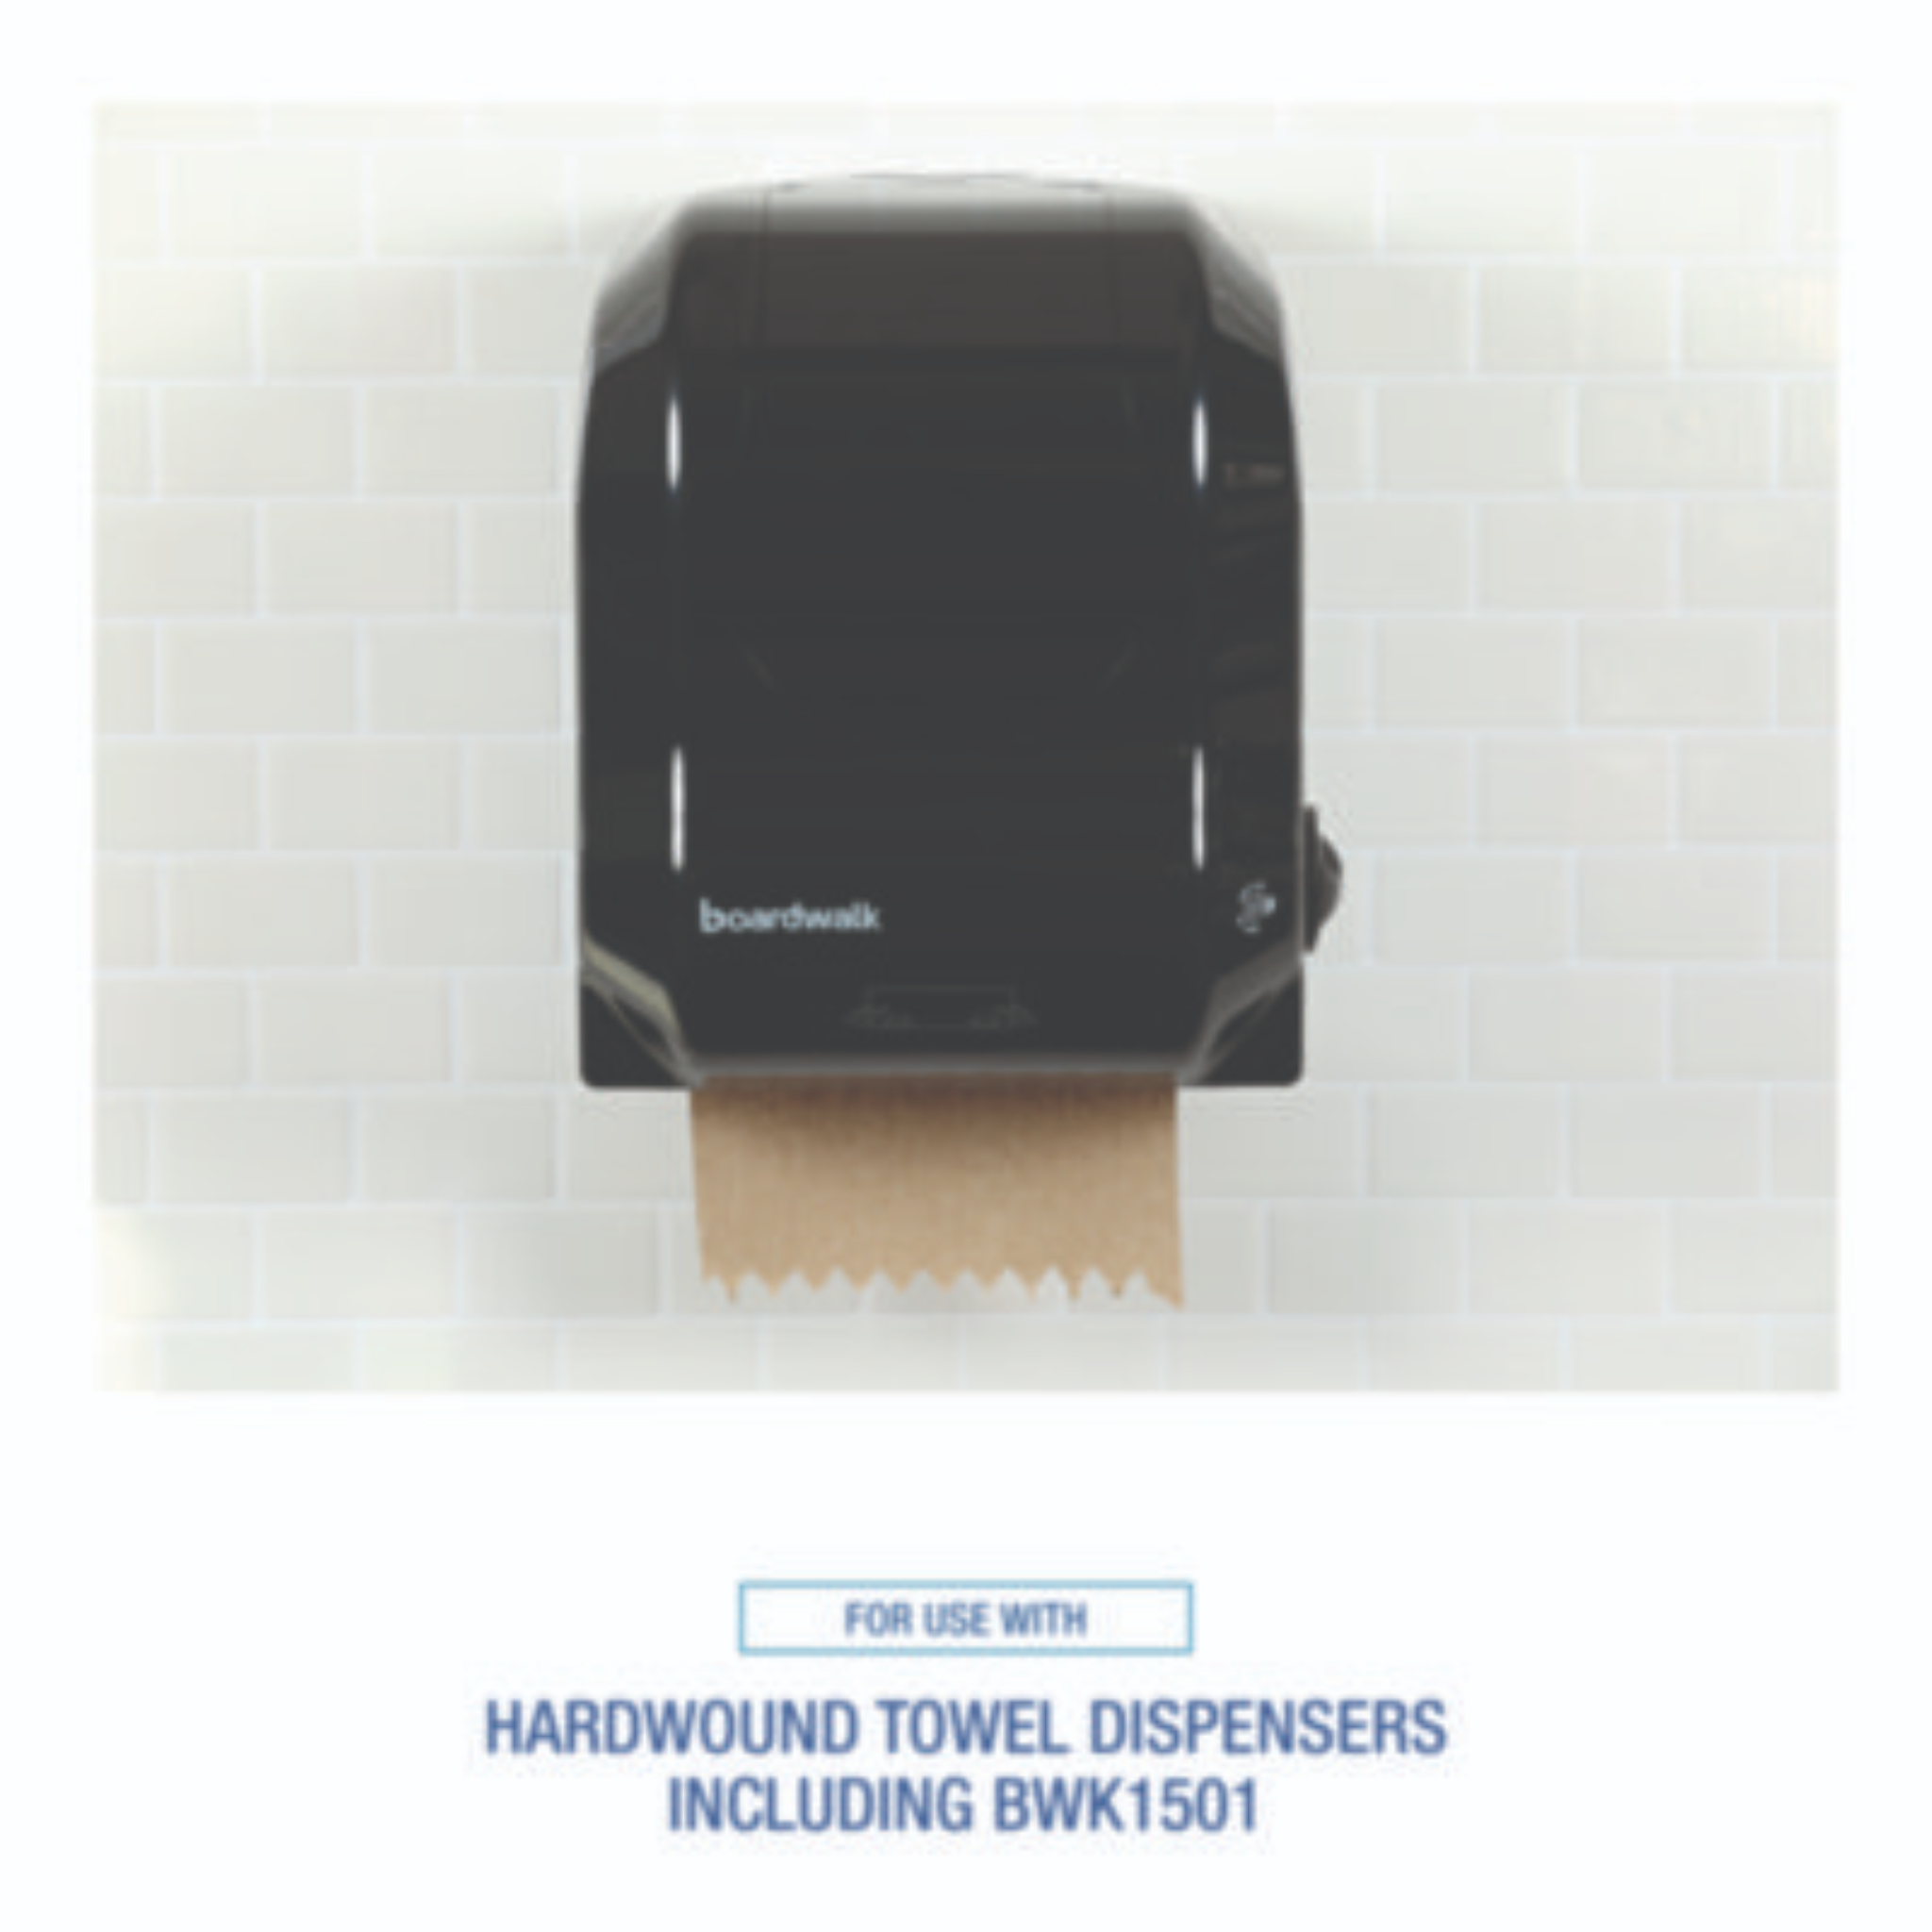 BOARDWALK BWK6256 Hardwound Paper Towels, Dispensers